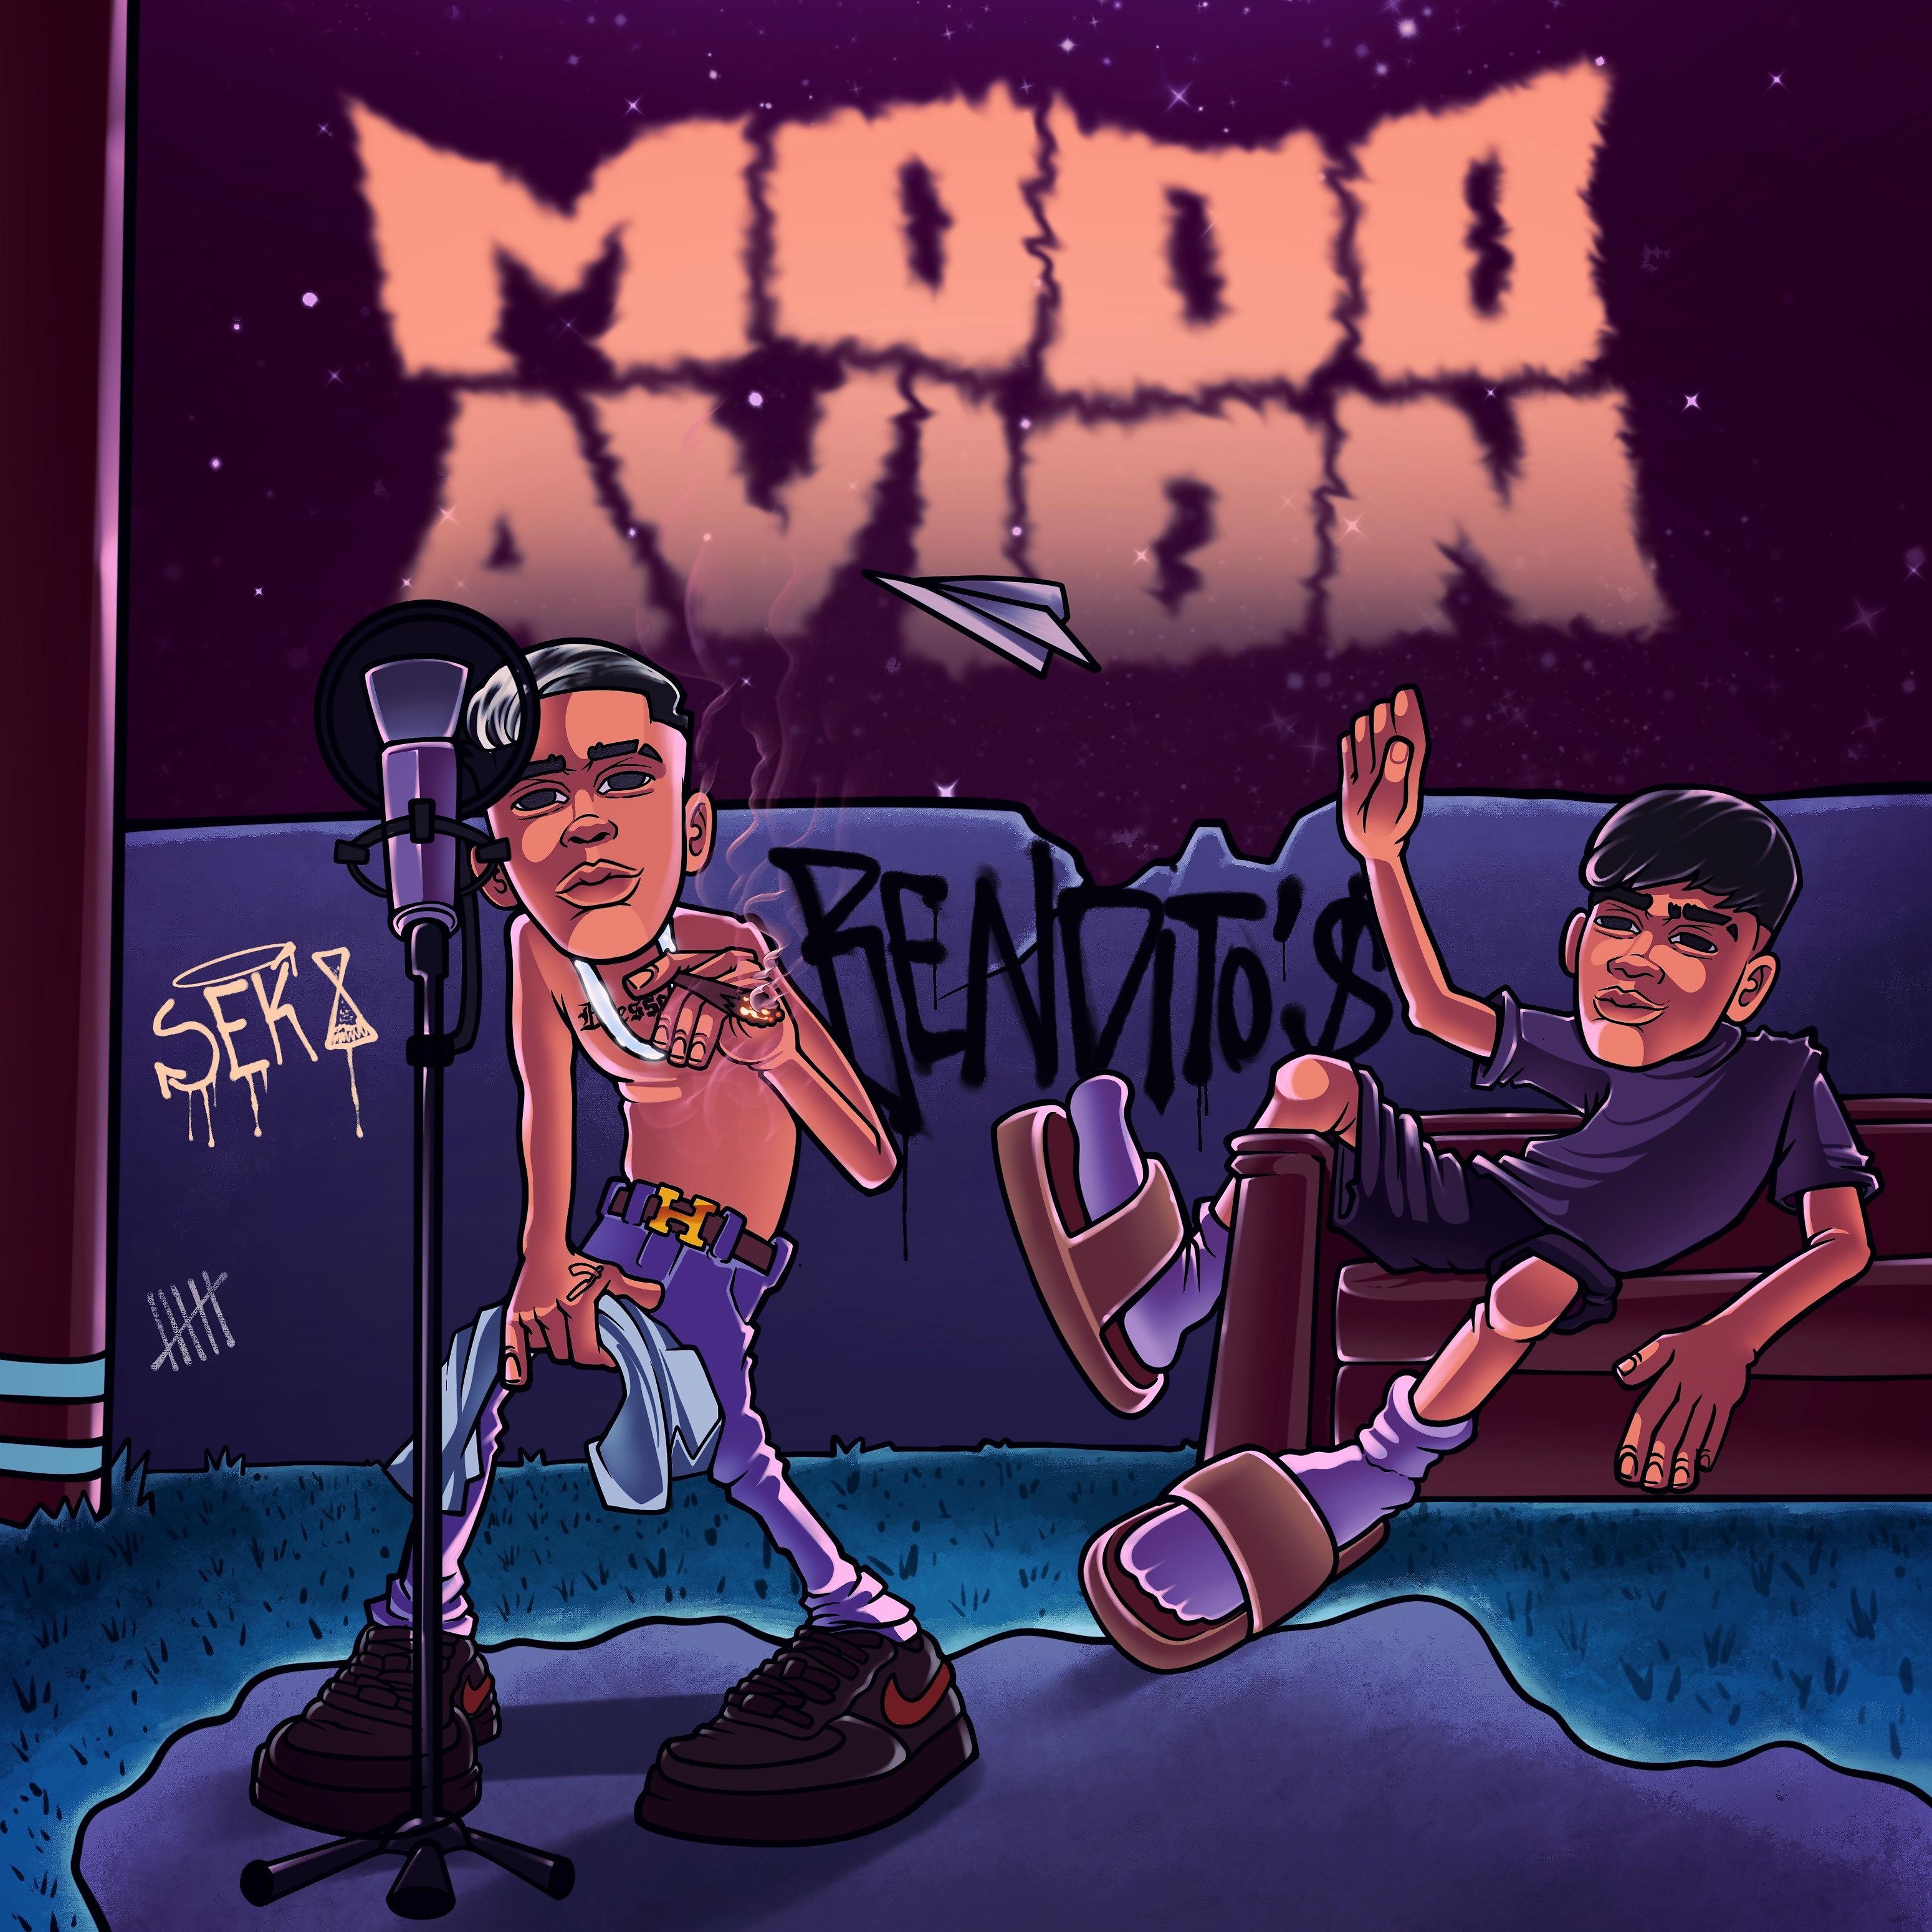 Постер альбома Modo Avion